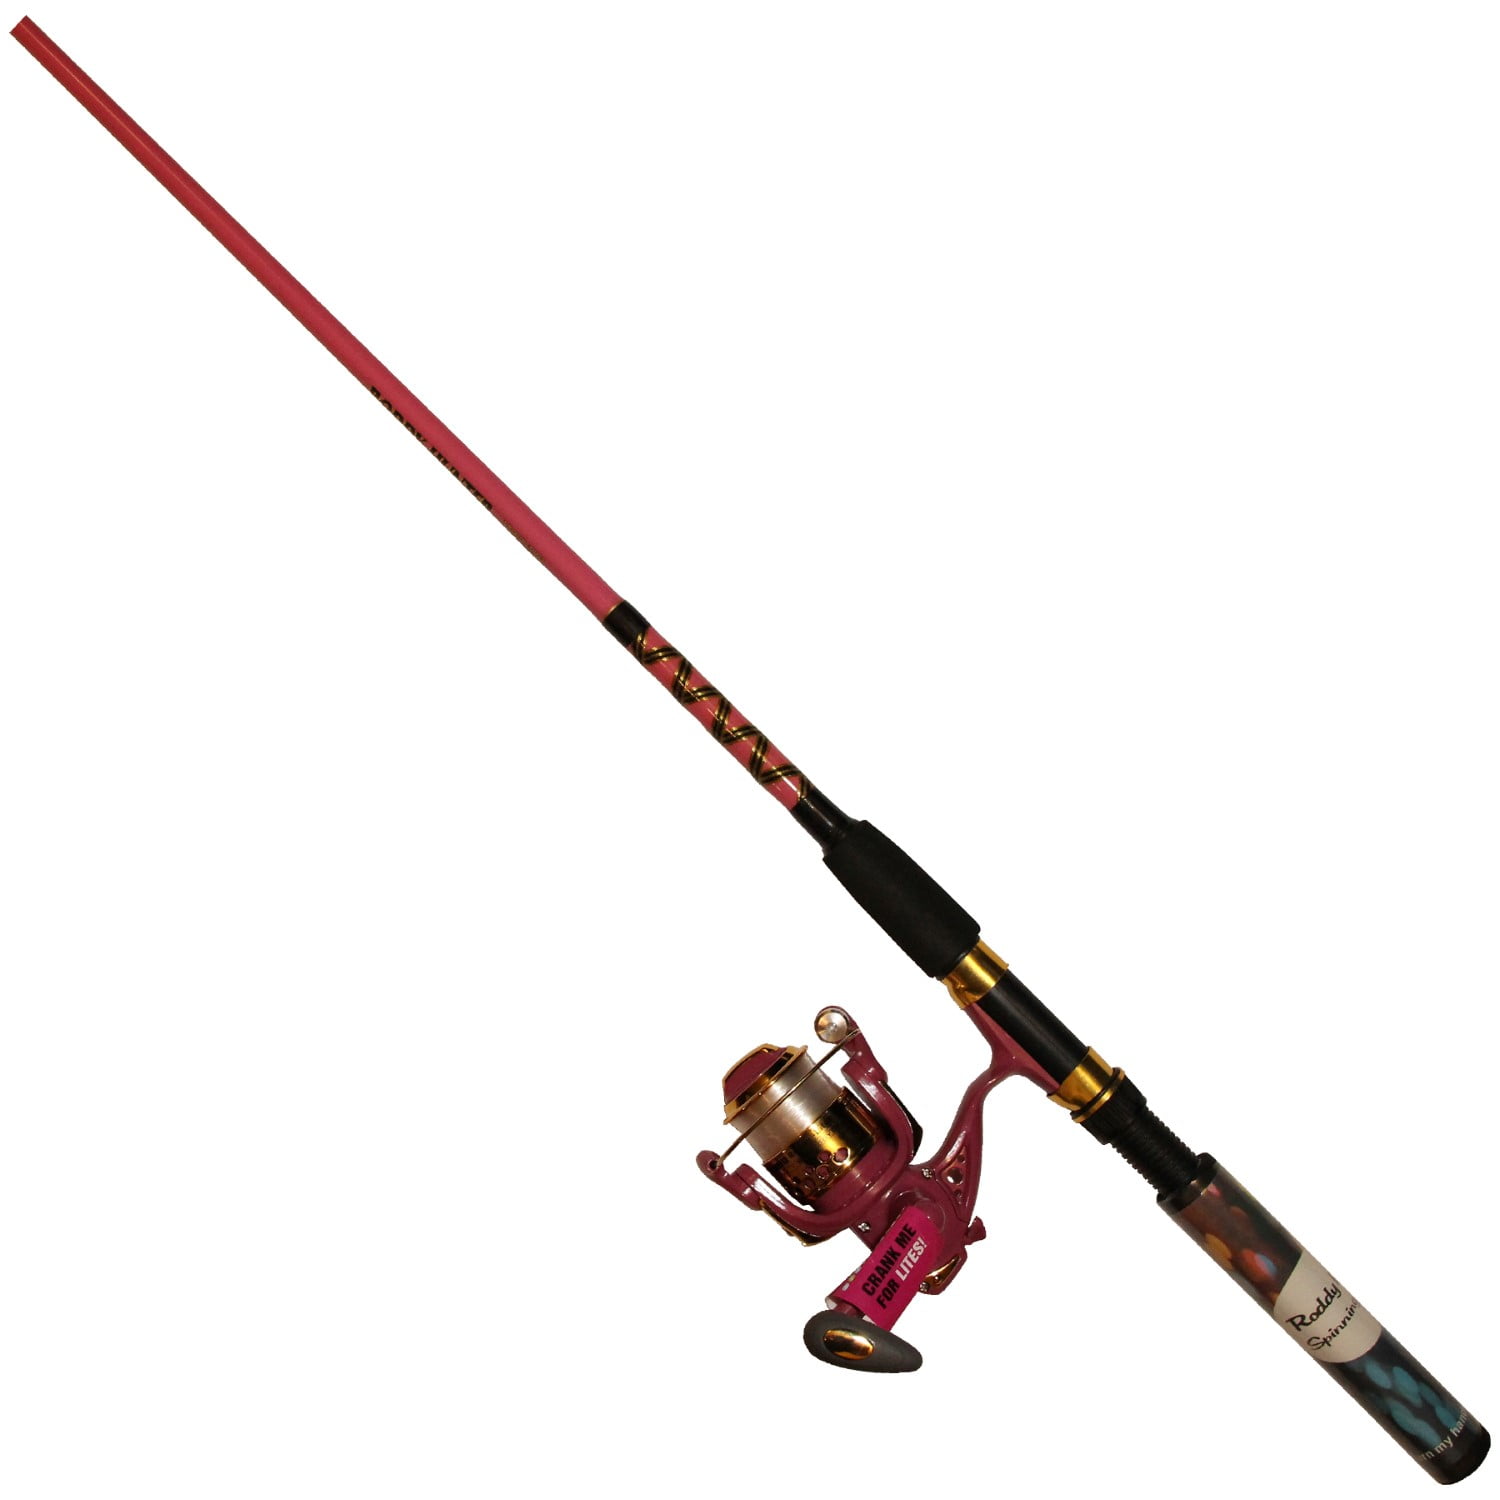  Master Fishing Tackle DN-449-WL: Roddy-Lites Combo